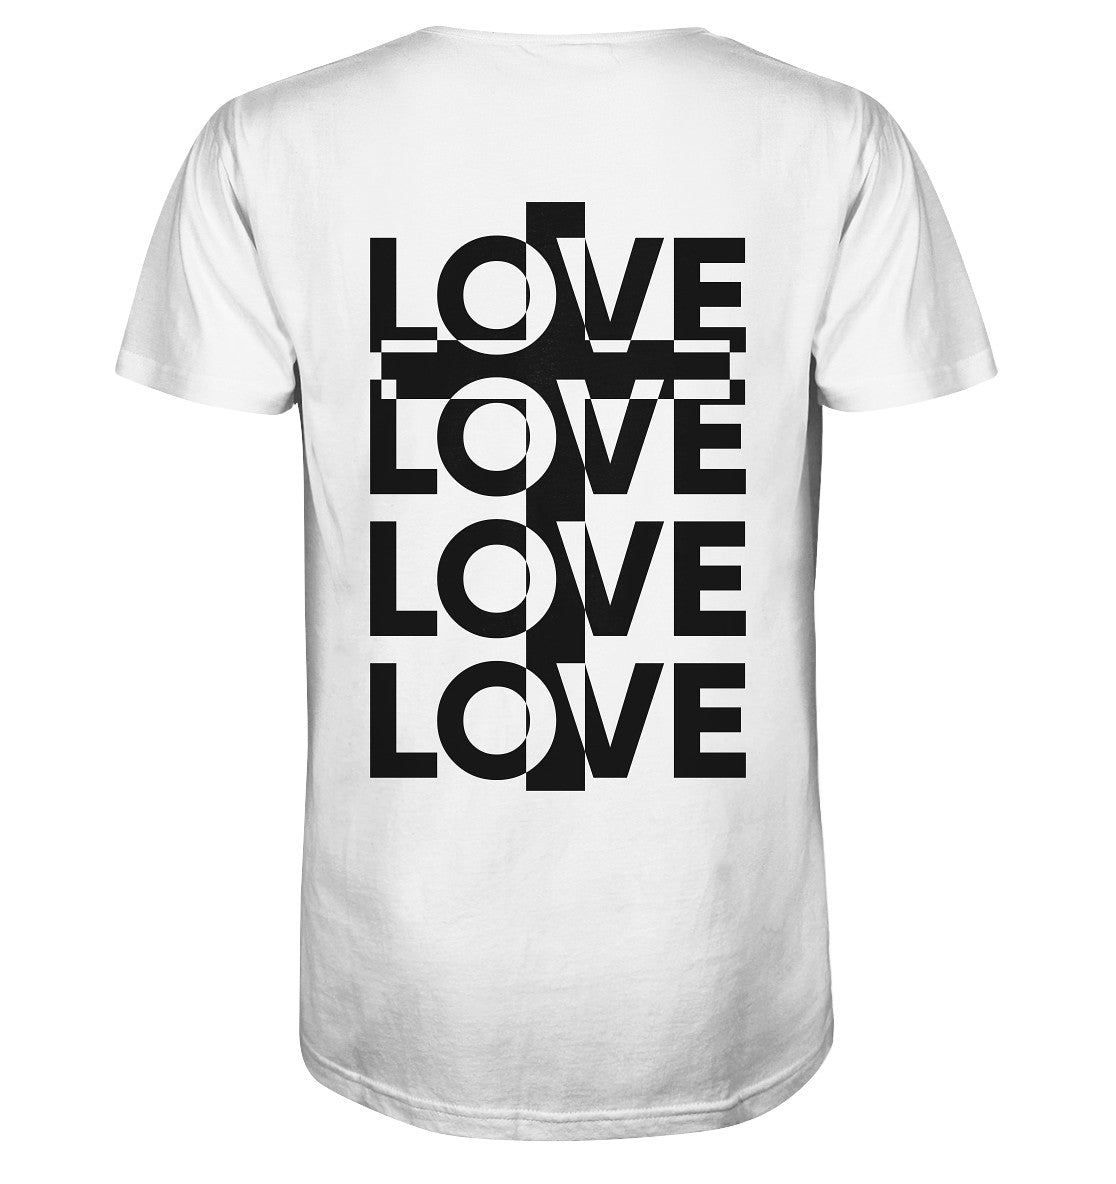 Joh 15,13 - LOVE - Kreuz - Organic Shirt